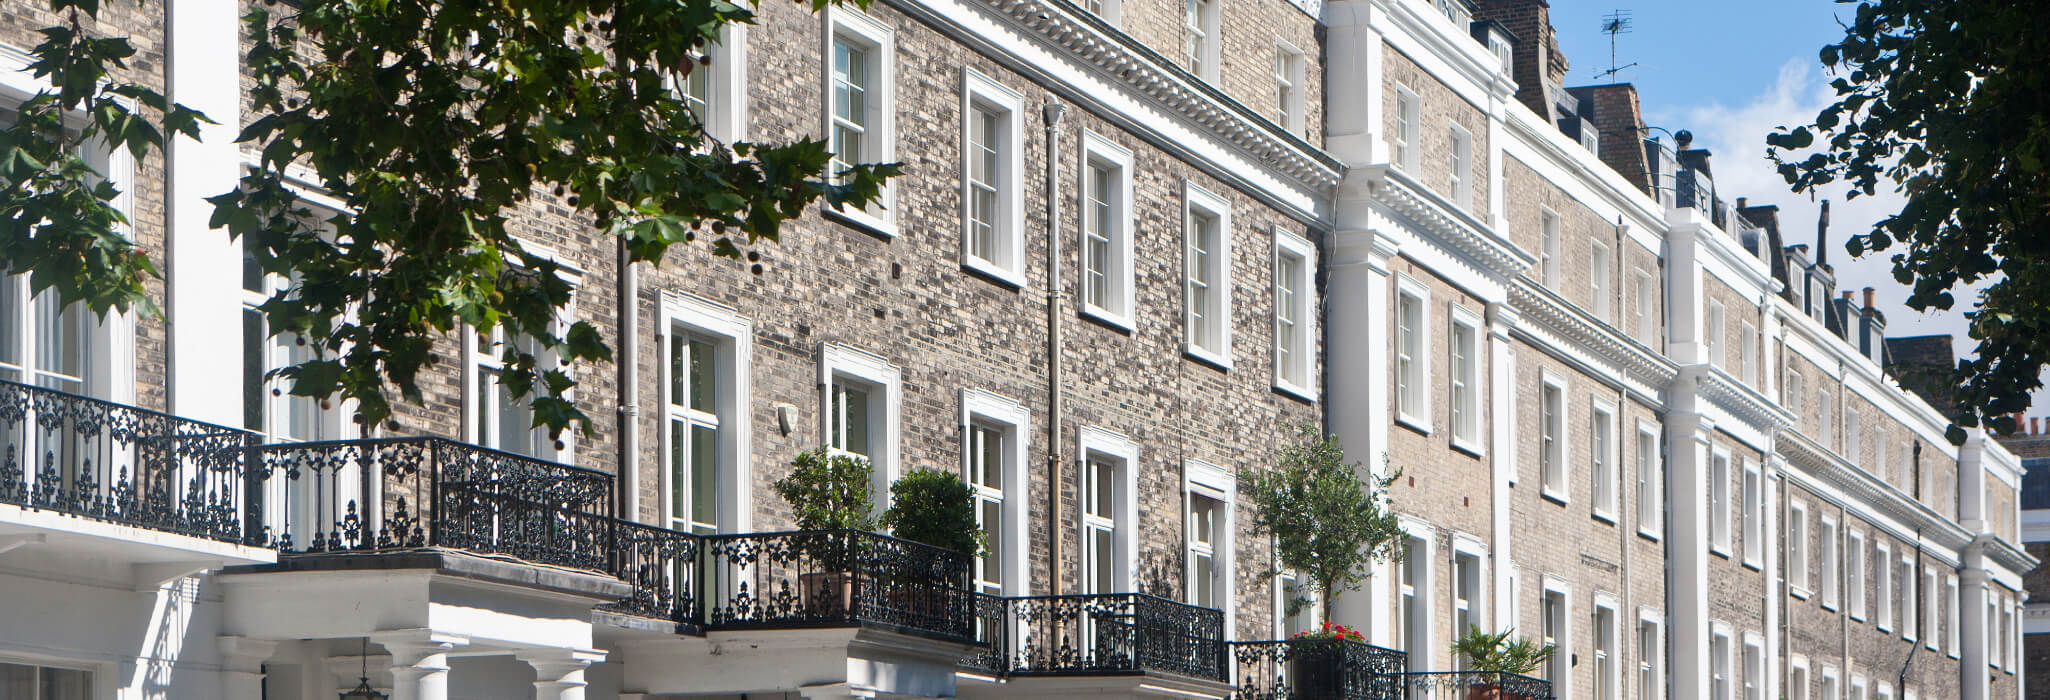 Bristol Residential Property Market